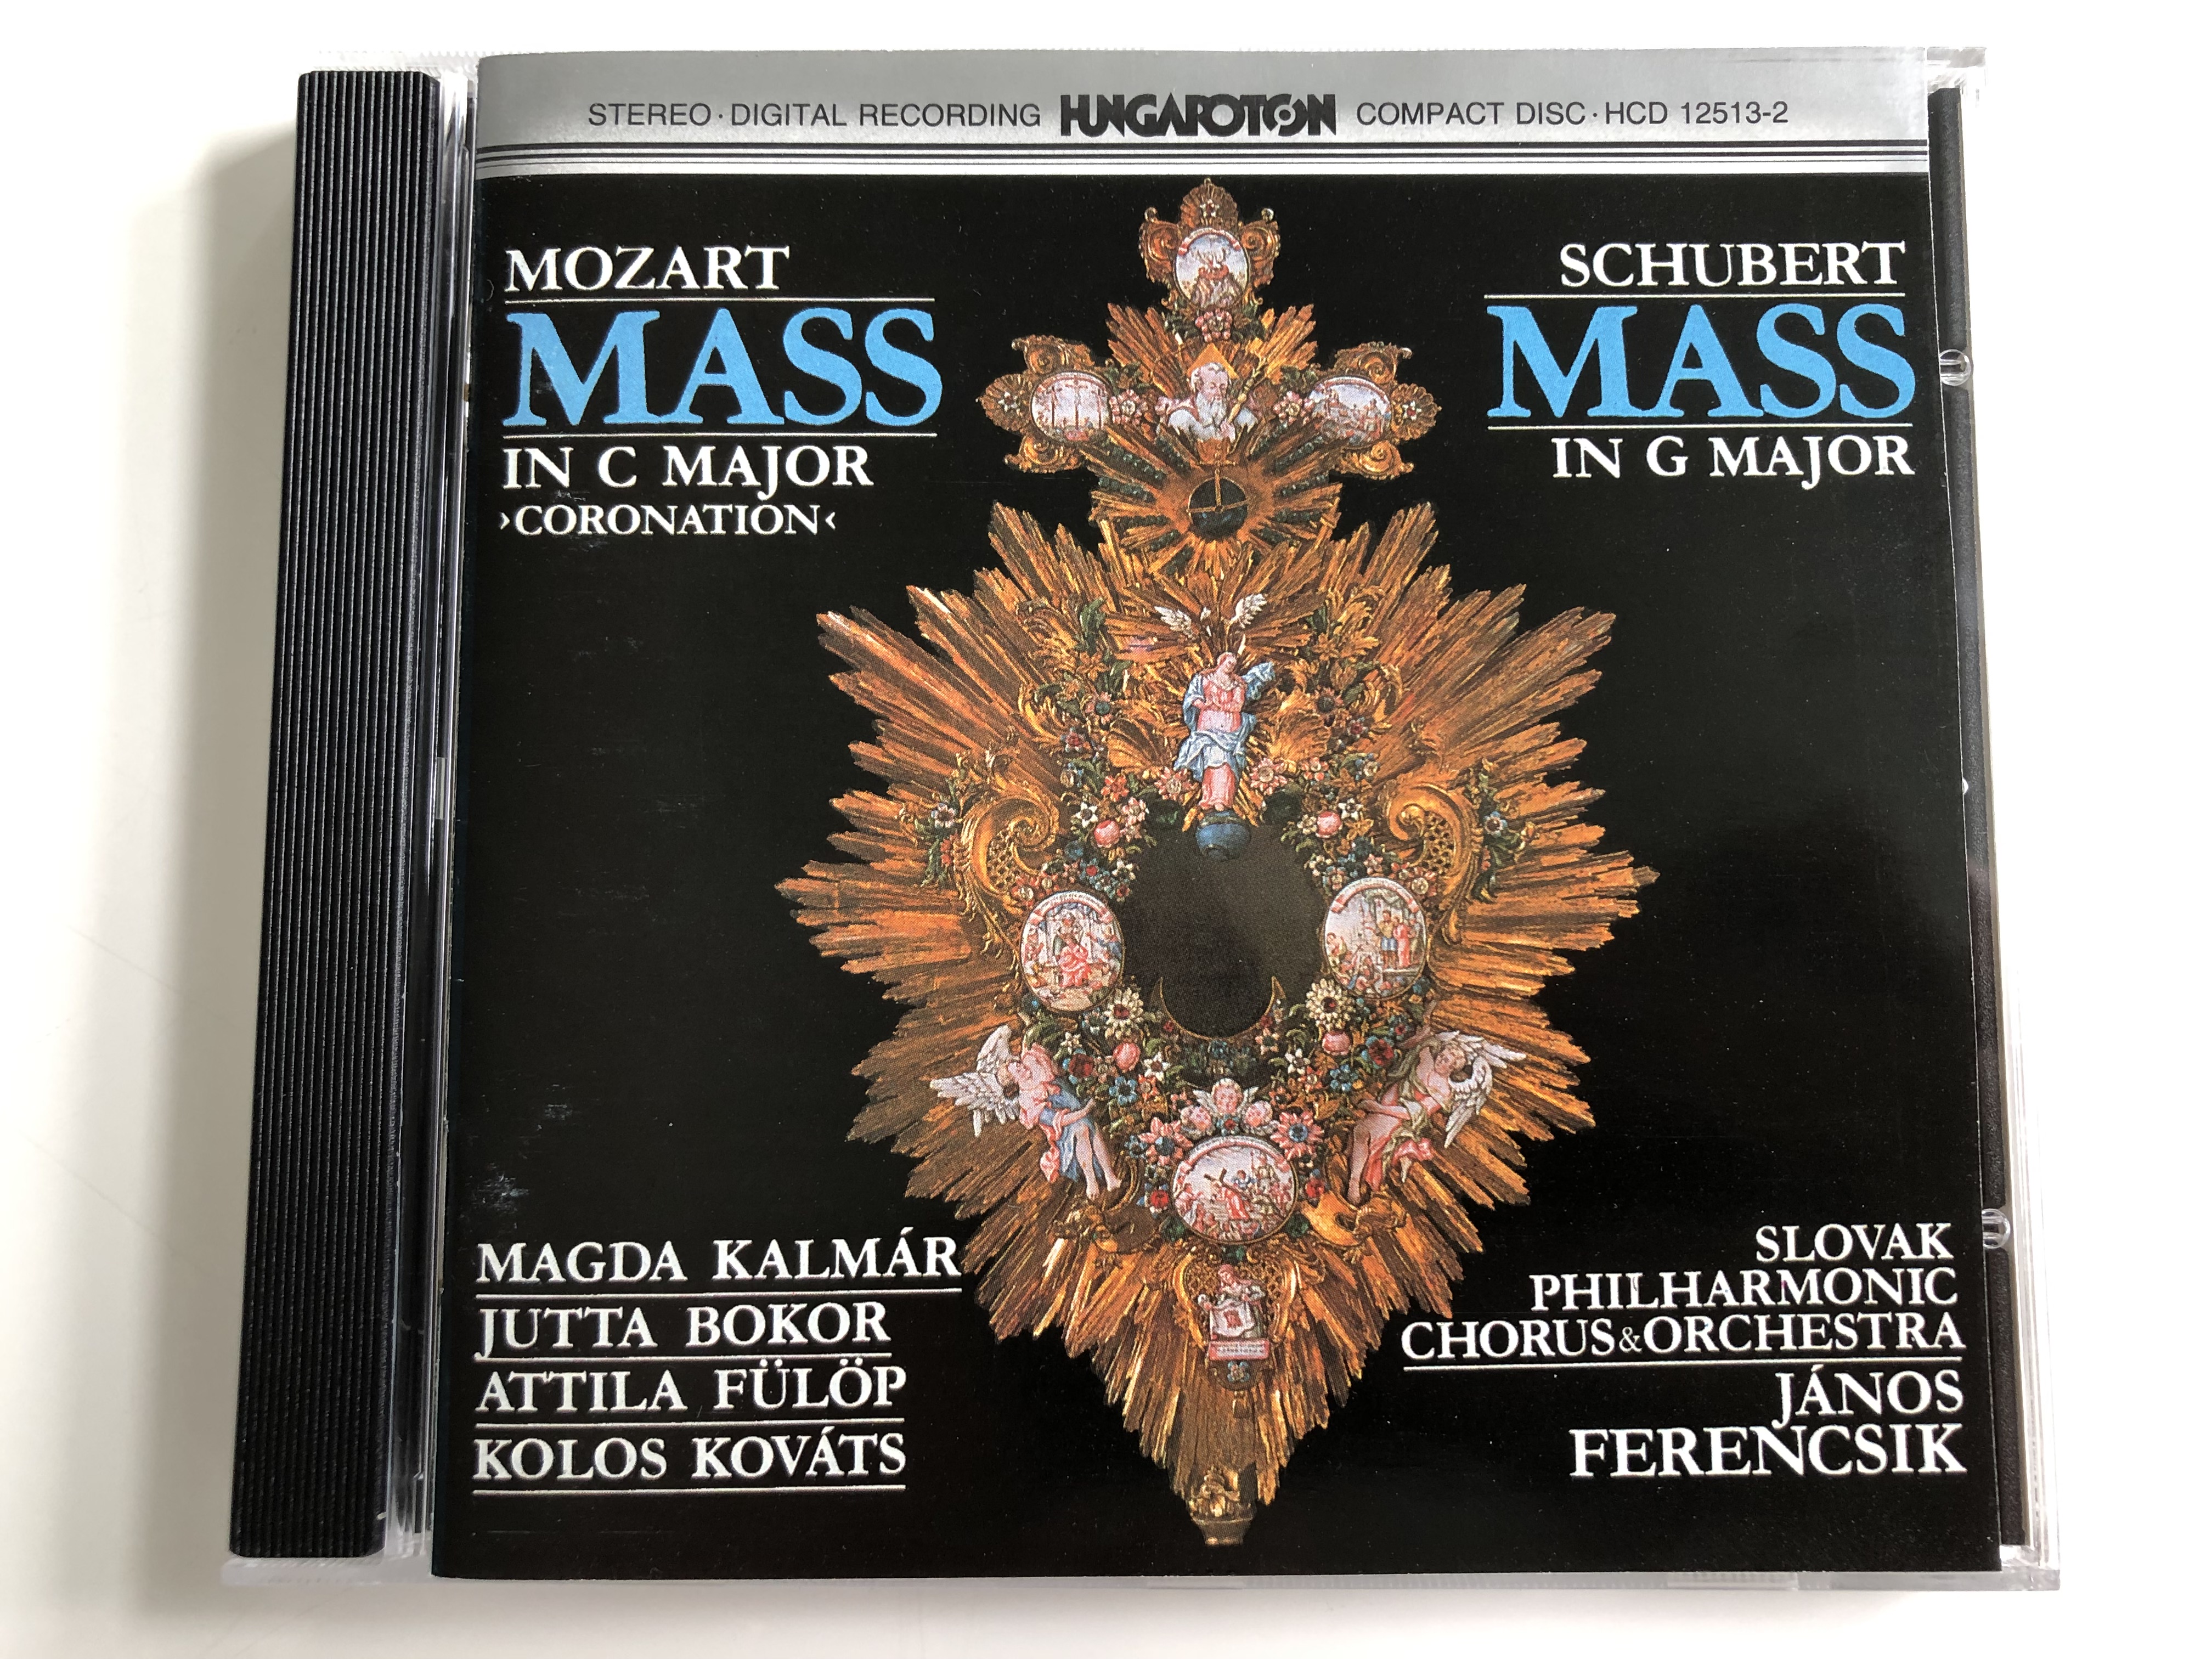 mozart-mass-in-c-major-coronation-schubert-mass-in-g-major-magda-kalmar-jutta-bokor-attila-fulop-kolos-kovats-slovak-philharmonic-chorus-orchestra-conducted-j-nos-ferencsik-hunga-1-.jpg